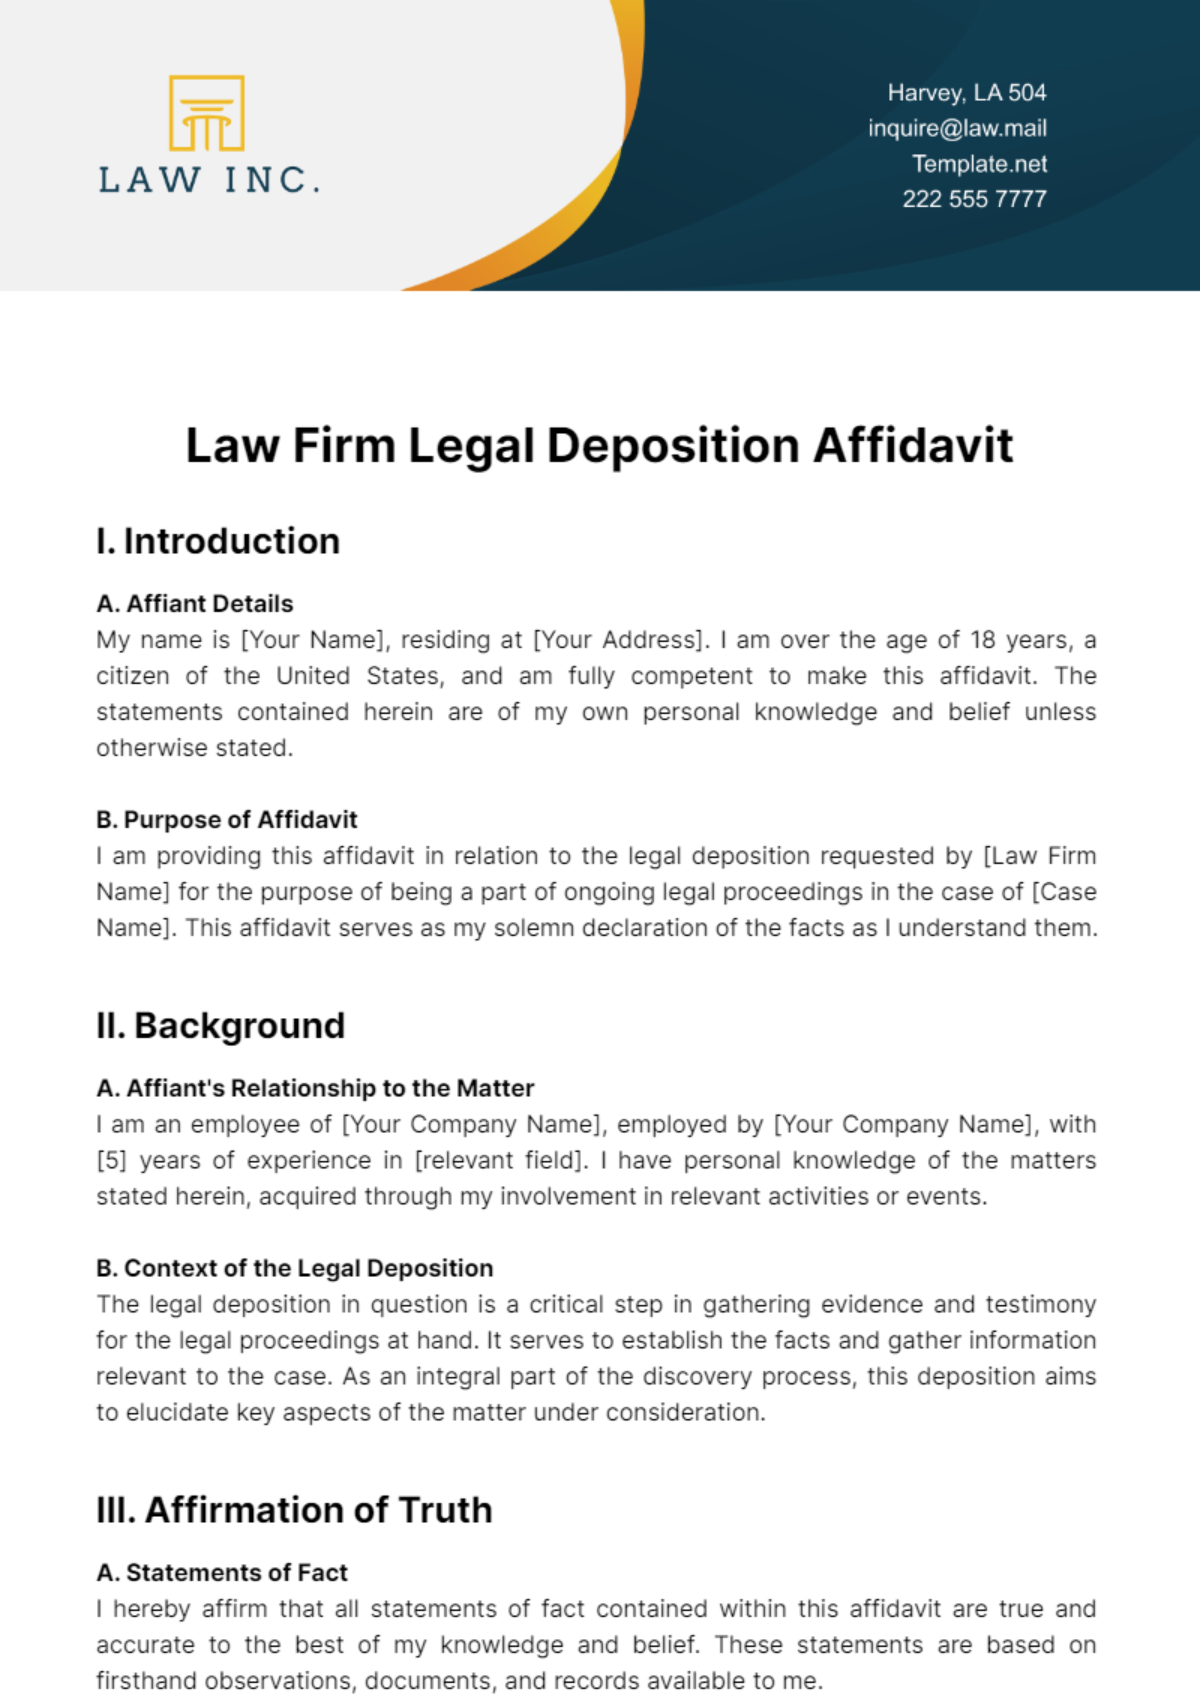 Law Firm Legal Deposition Affidavit Template